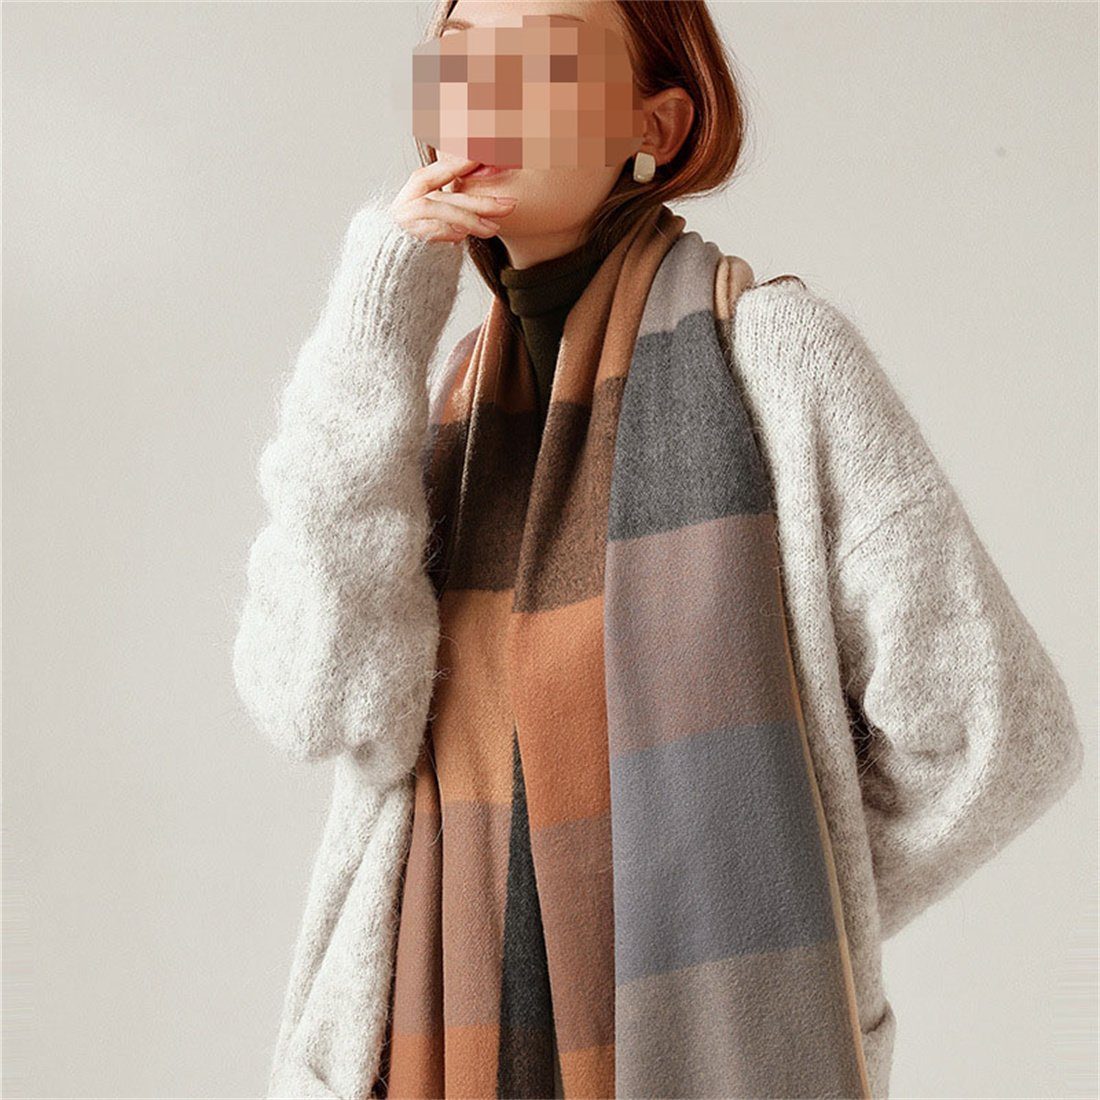 quadratischen gestreiften DÖRÖY Warm Grau Schal, Damen Modeschal Vintage Winter Schal